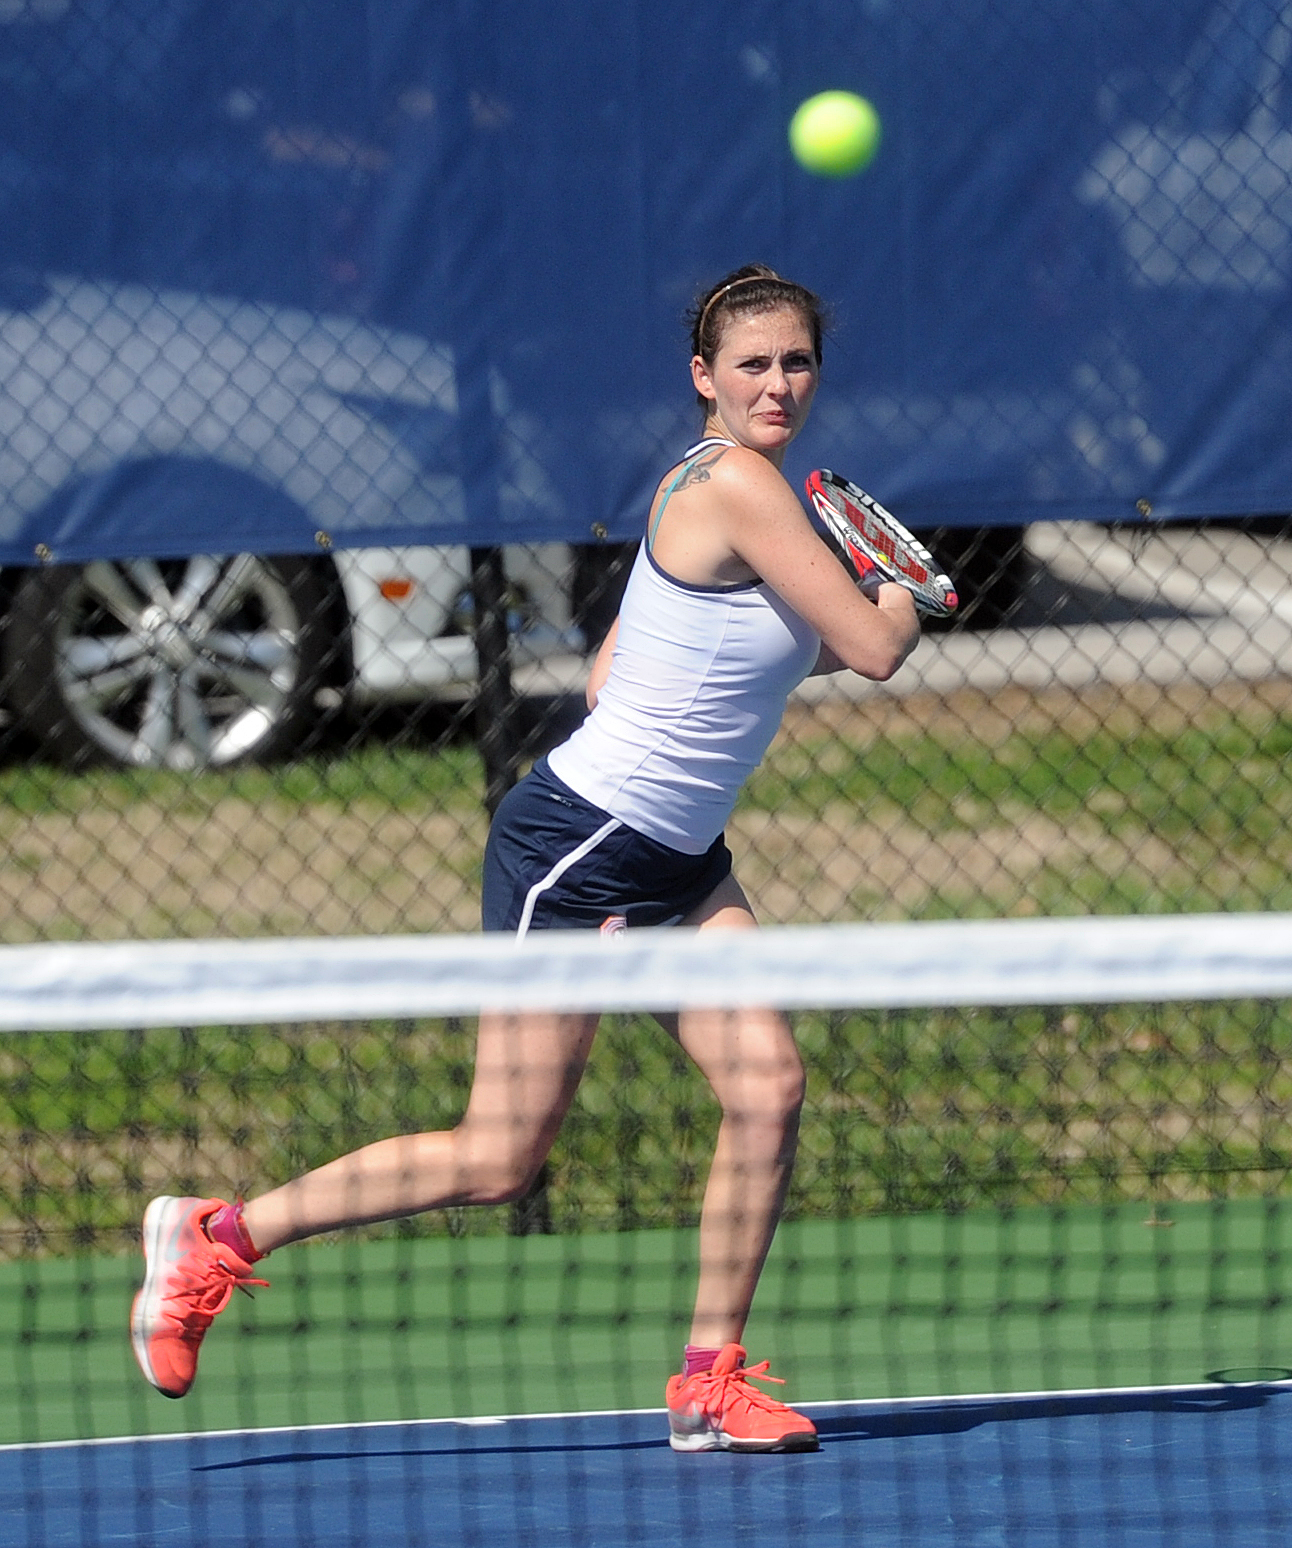 Carson-Newman Women's Tennis: Florida Tech and Palm Beach Atlantic Preview